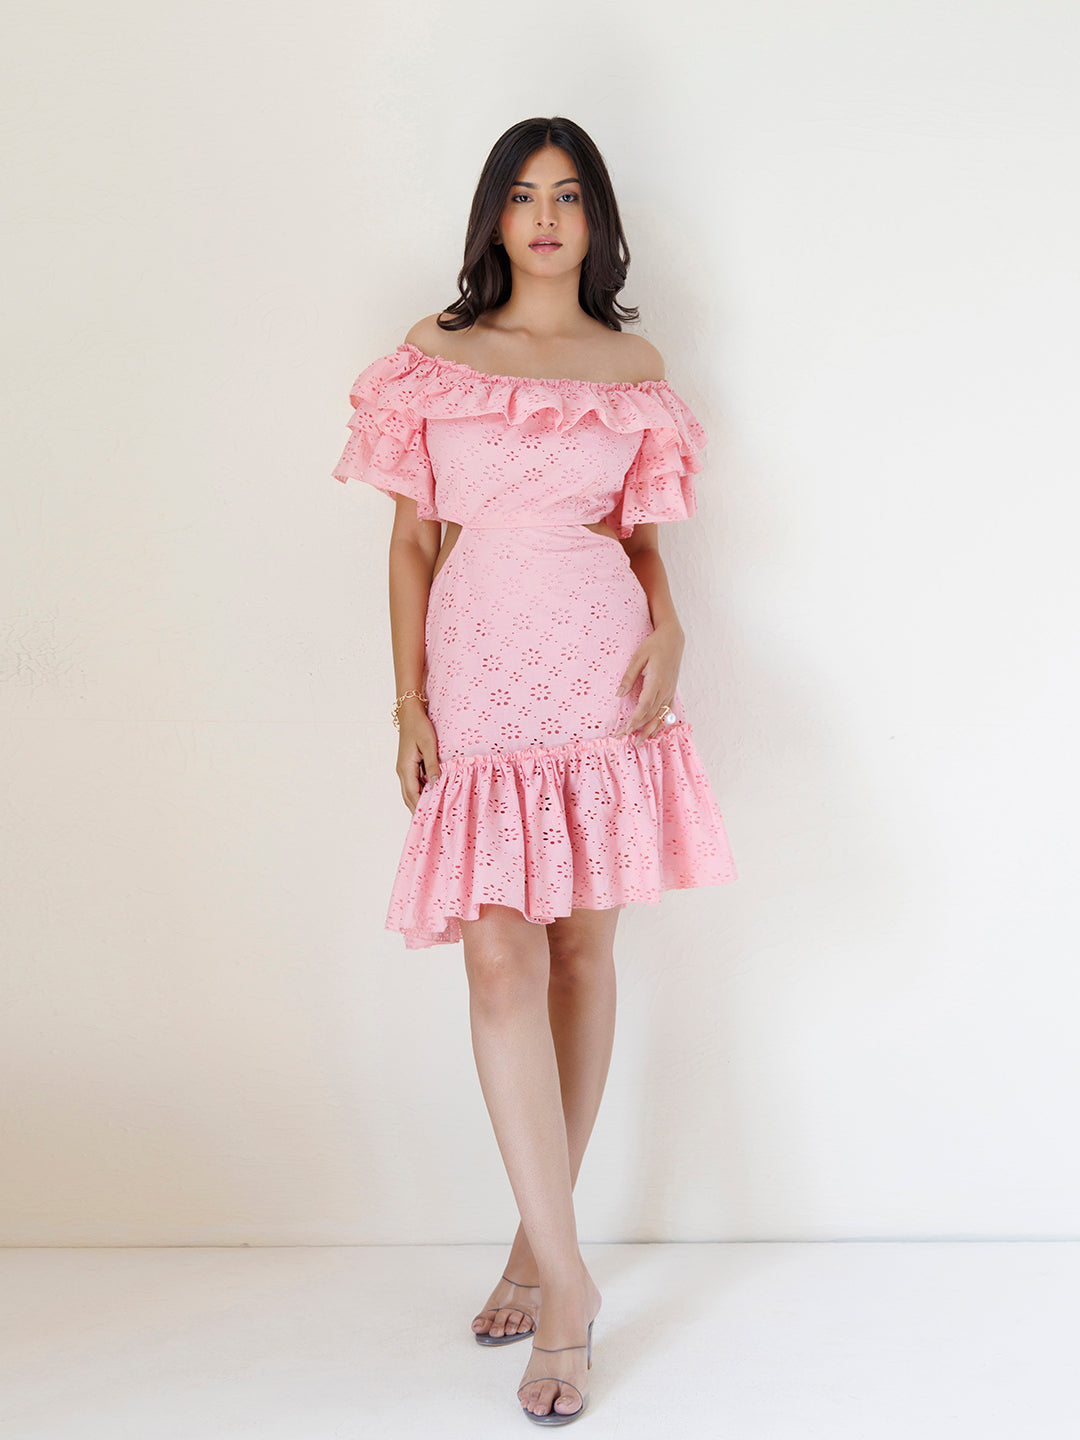 Peony Pink Cotton Schiffli Dress by ragavi